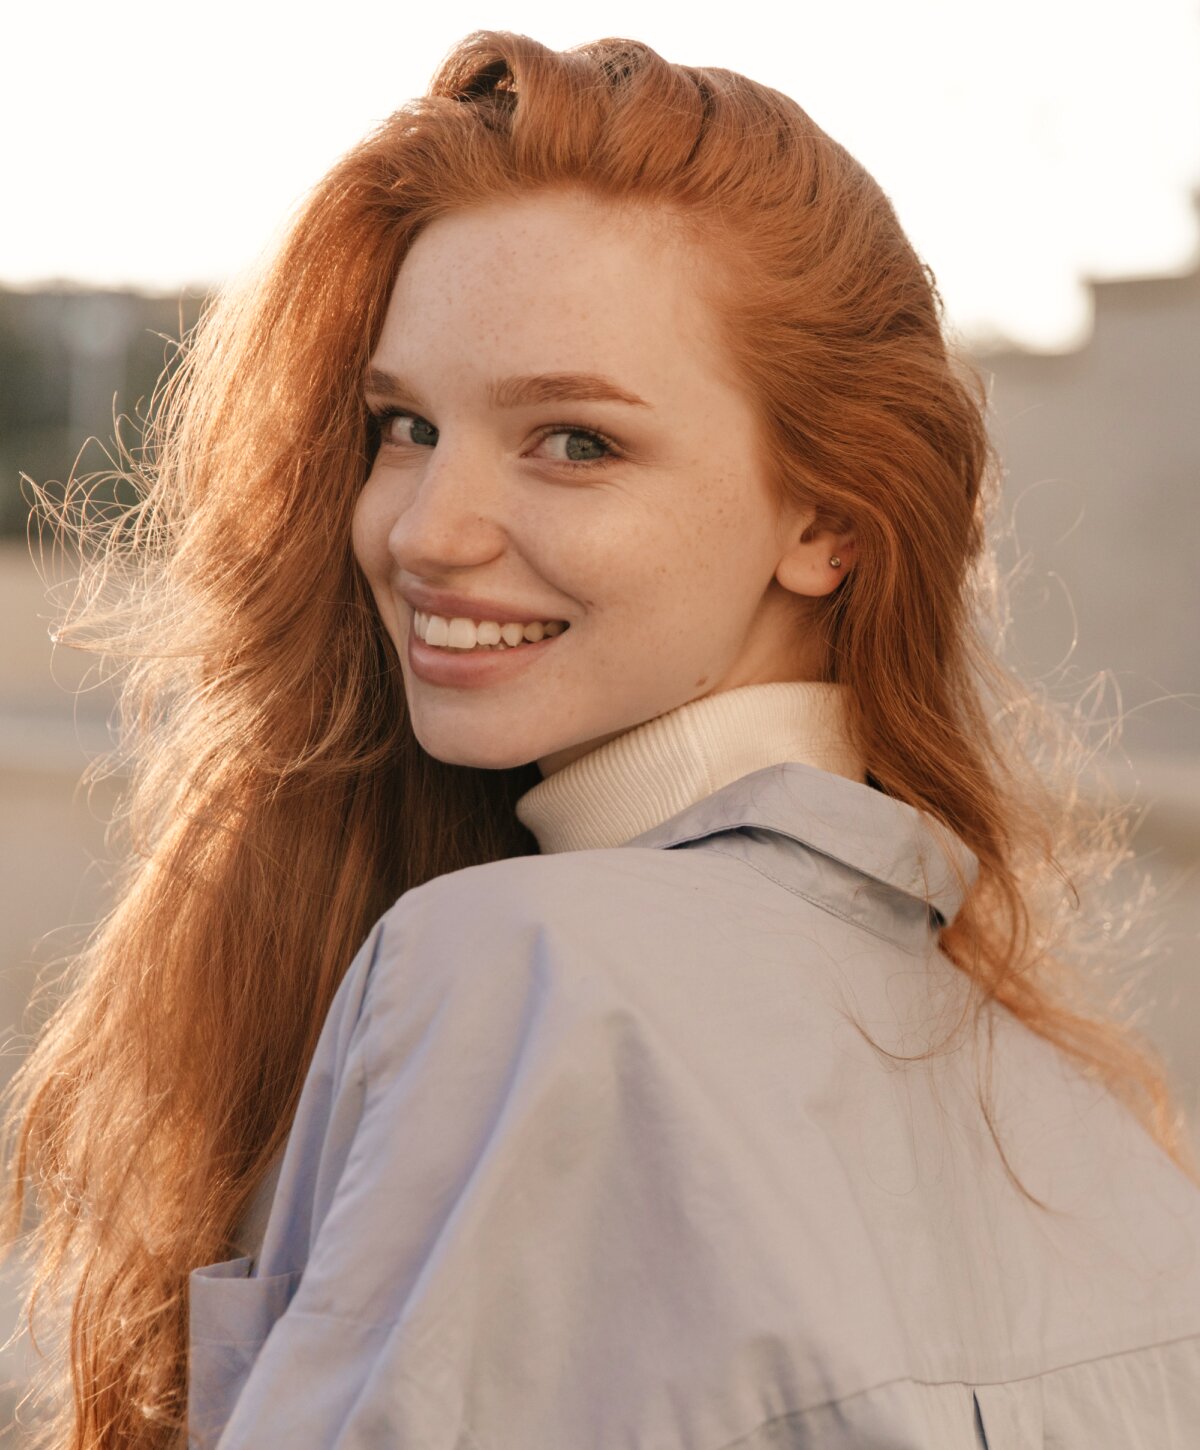 Nashville skin resurfacing model with red hair